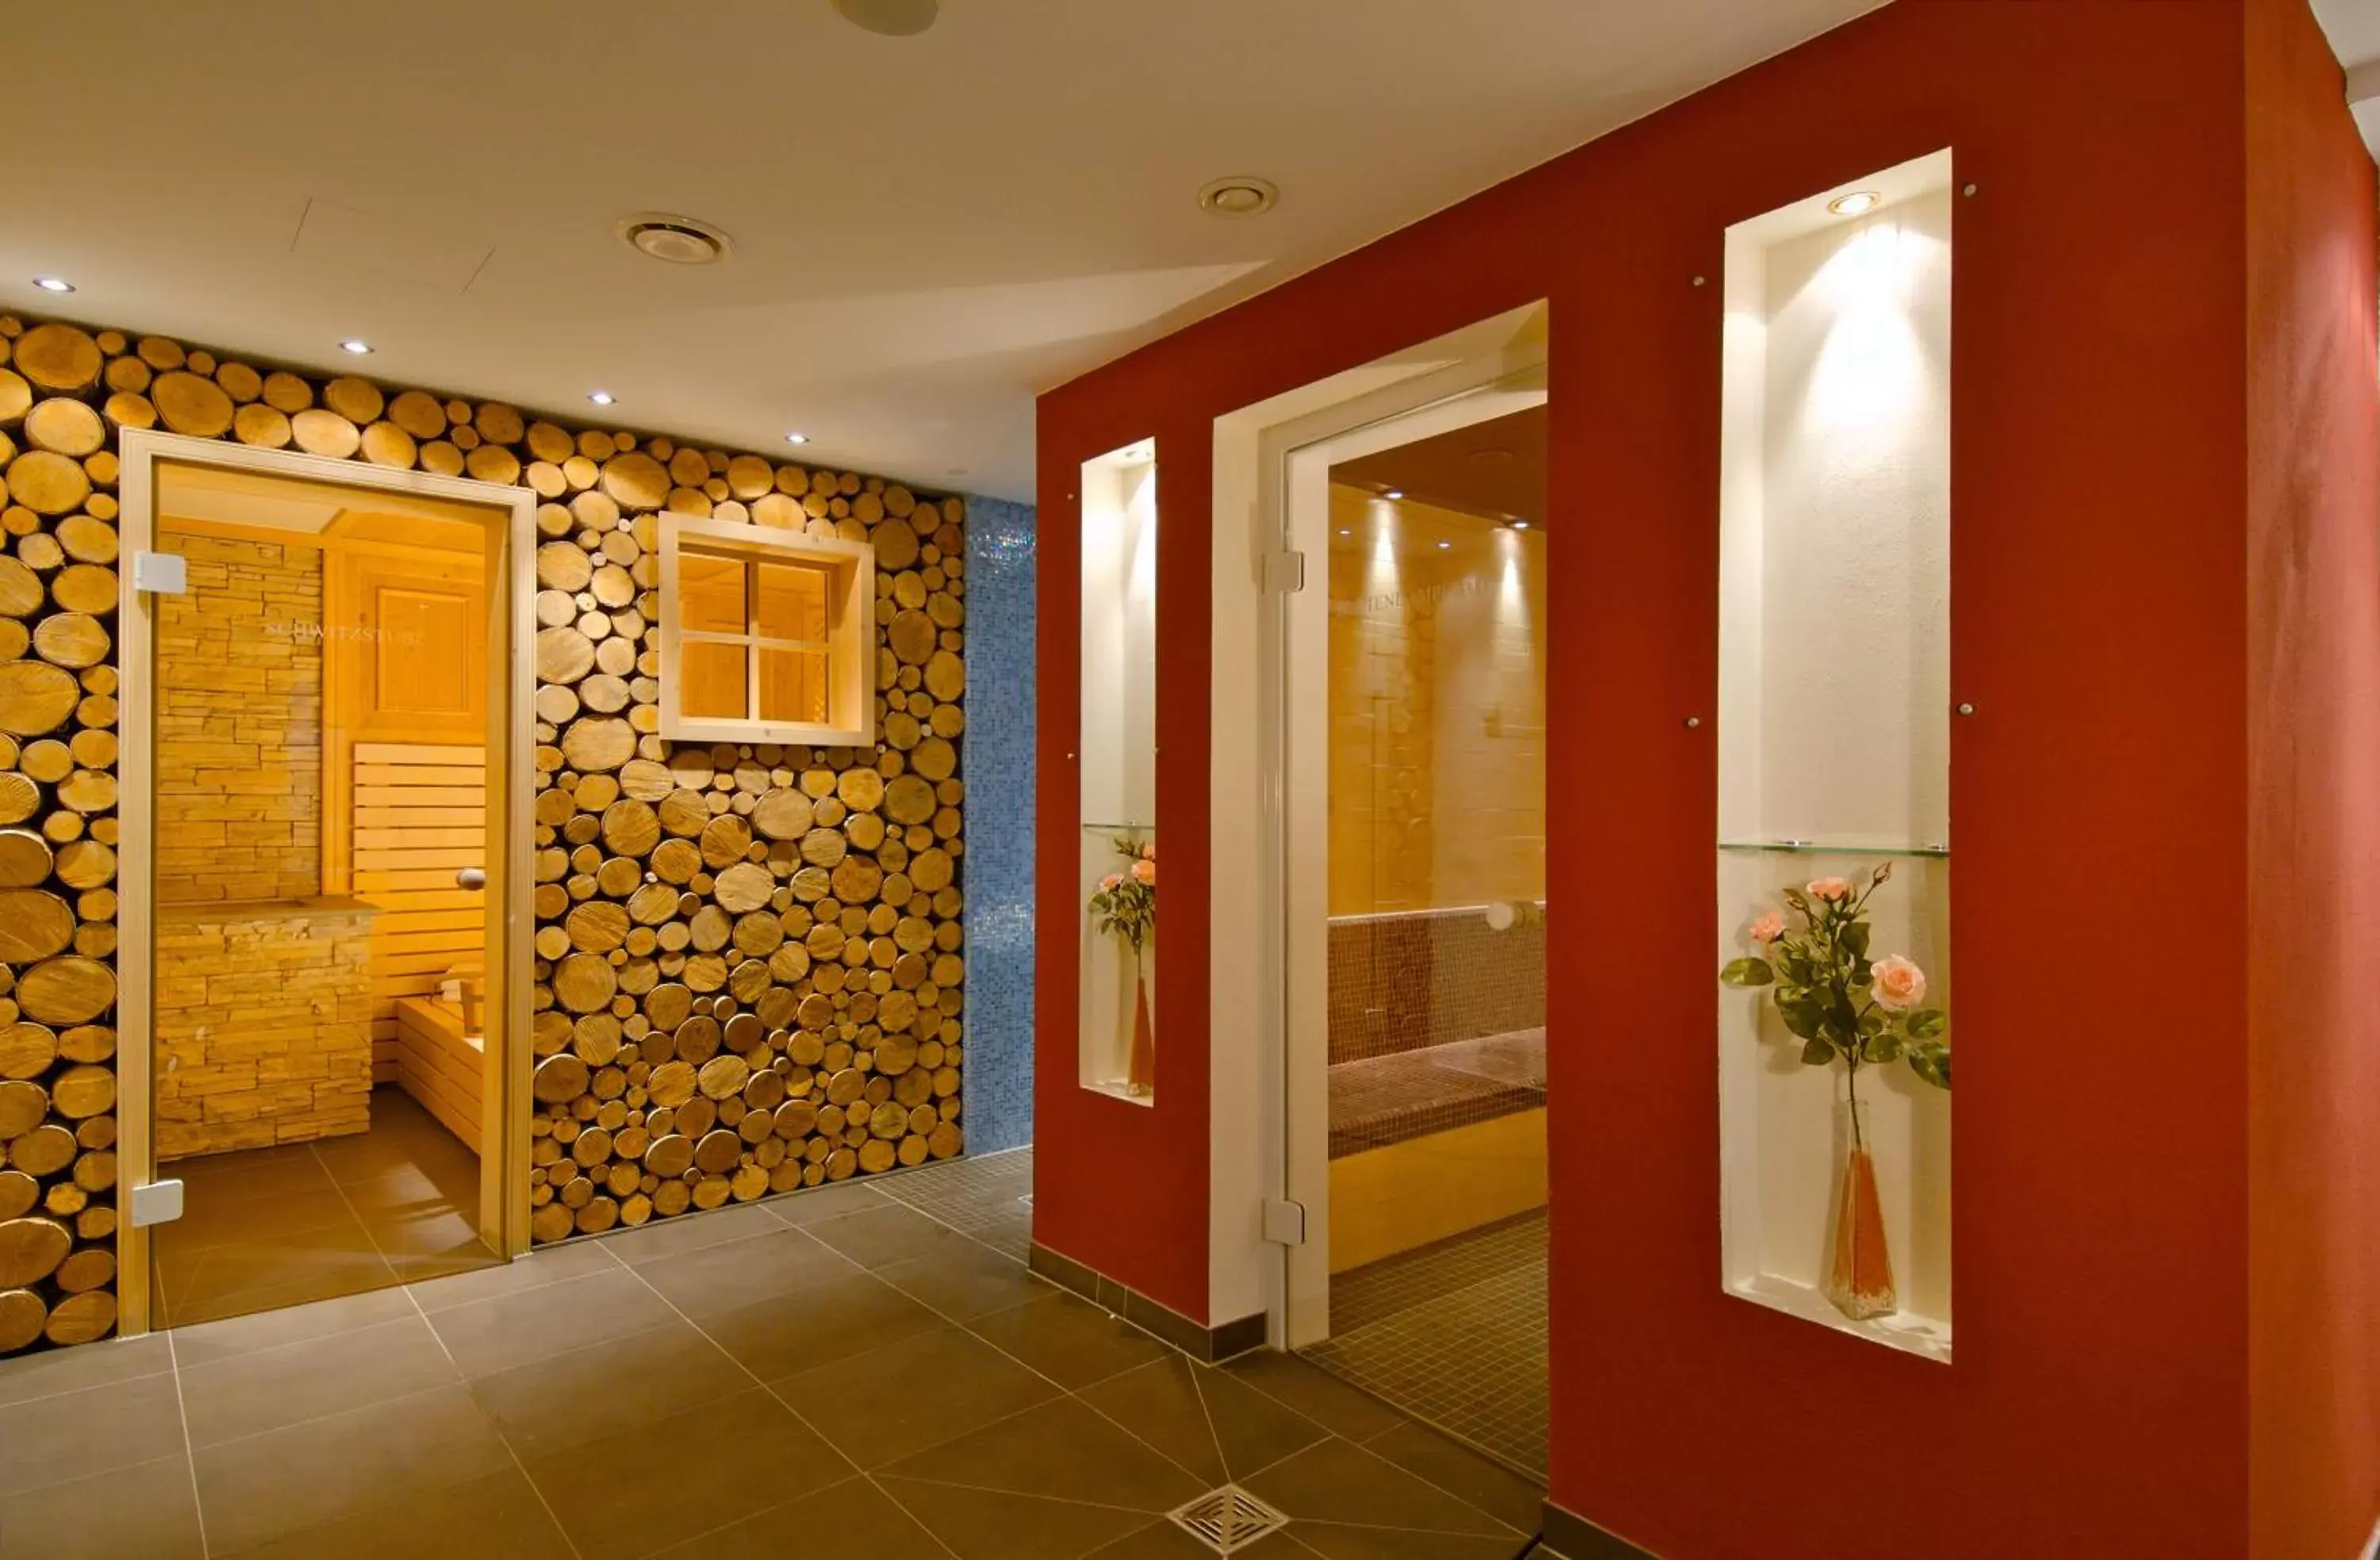 Spa and wellness centre/facilities, Bathroom in Reindl's Partenkirchener Hof